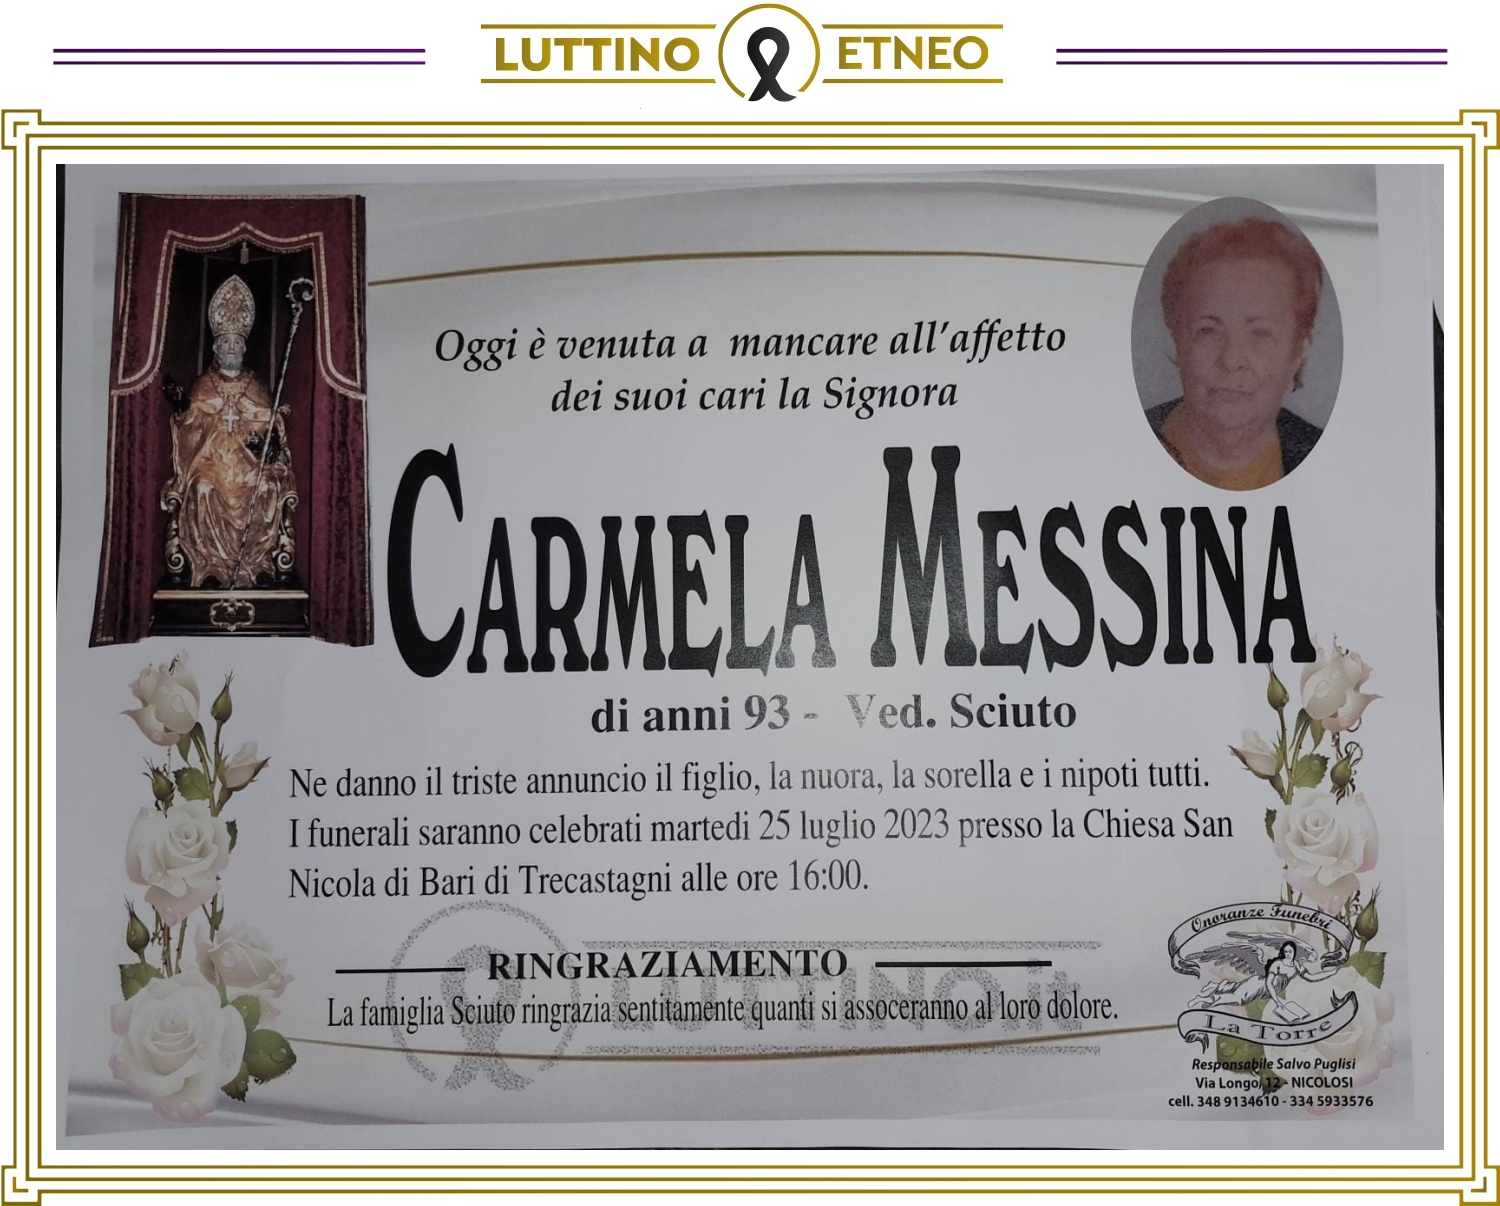 Carmela Messina